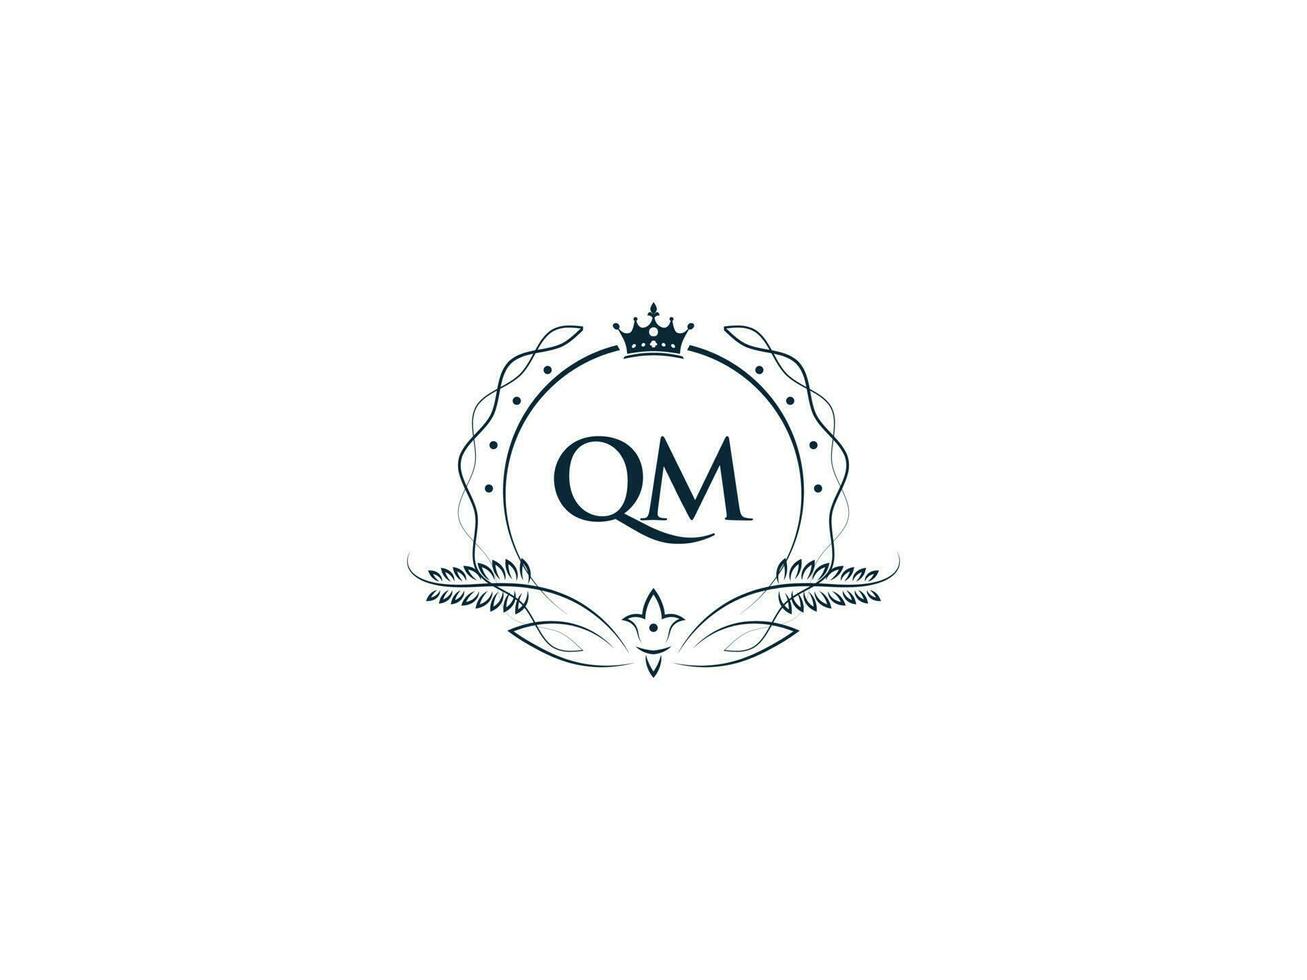 premie Koninklijk kroon qm logo, uniek brief qm mq logo icoon vector beeld ontwerp